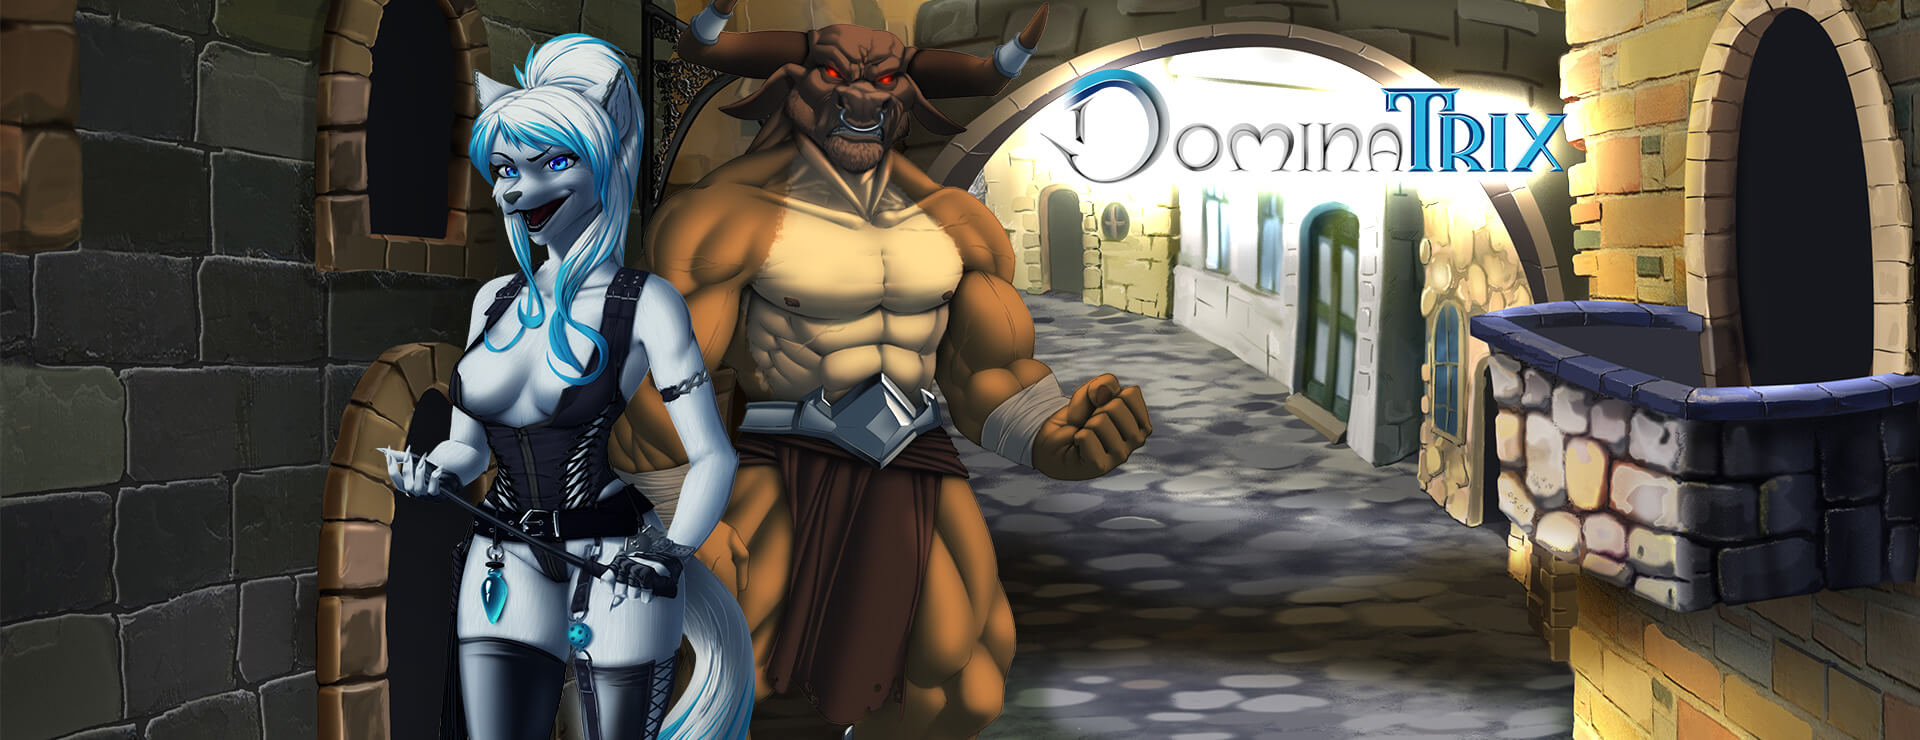 DominaTRIX - カジュアル ゲーム